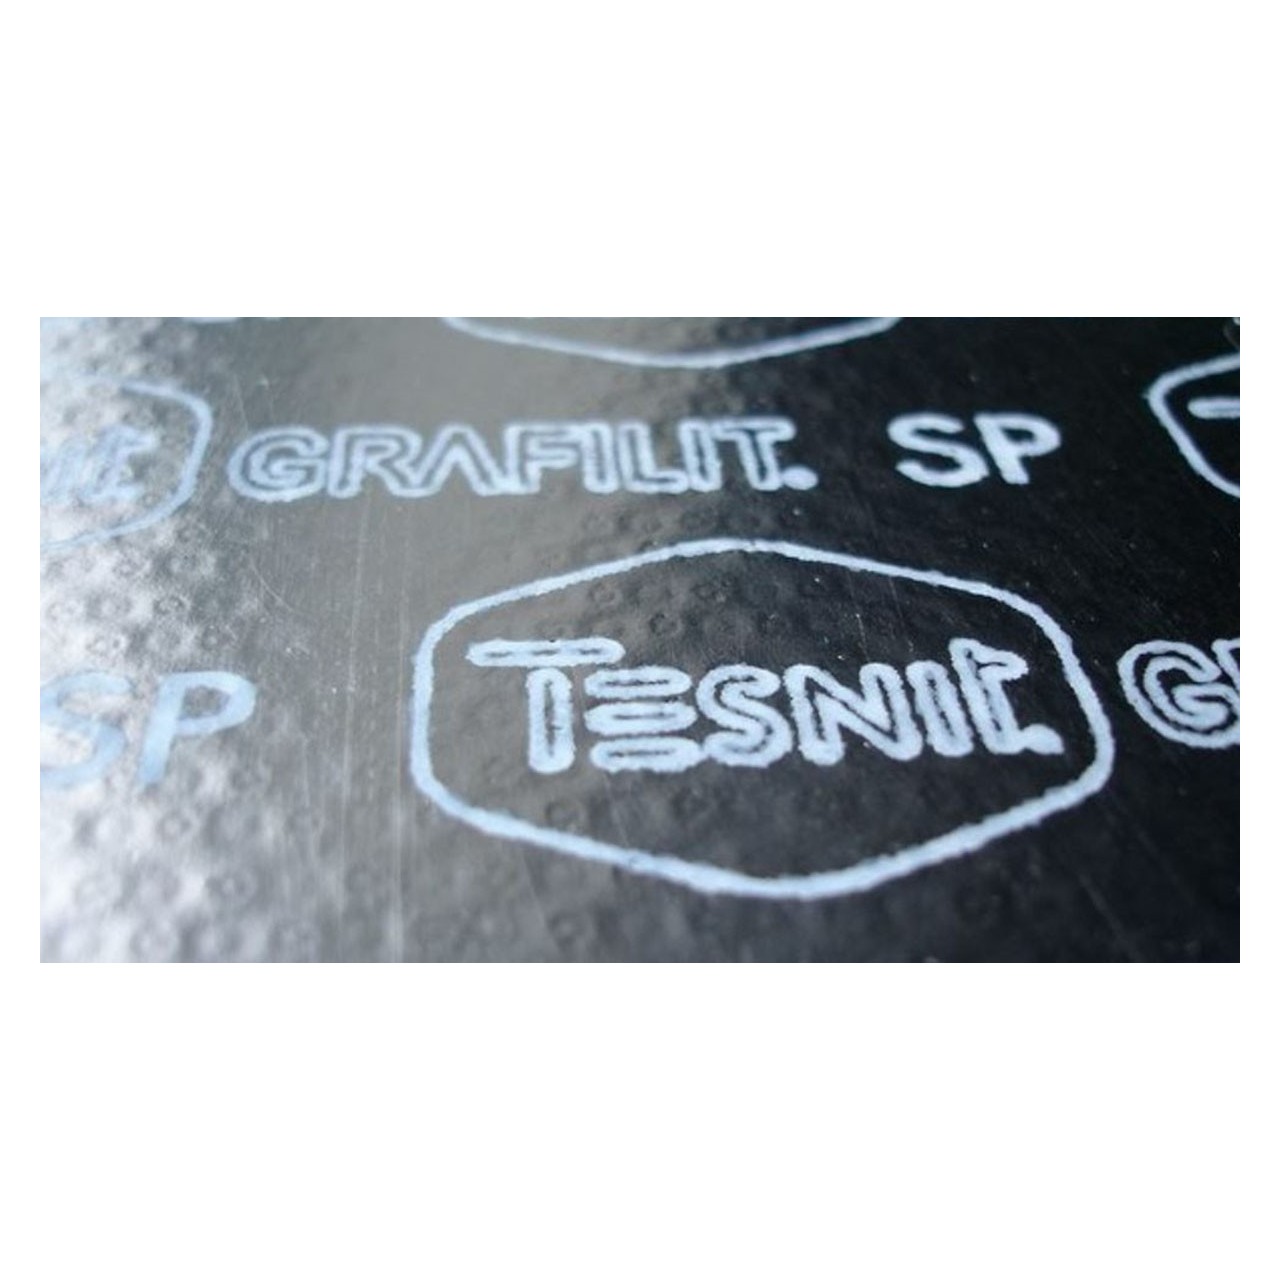 Plancha grafito expandido Grafilit SP